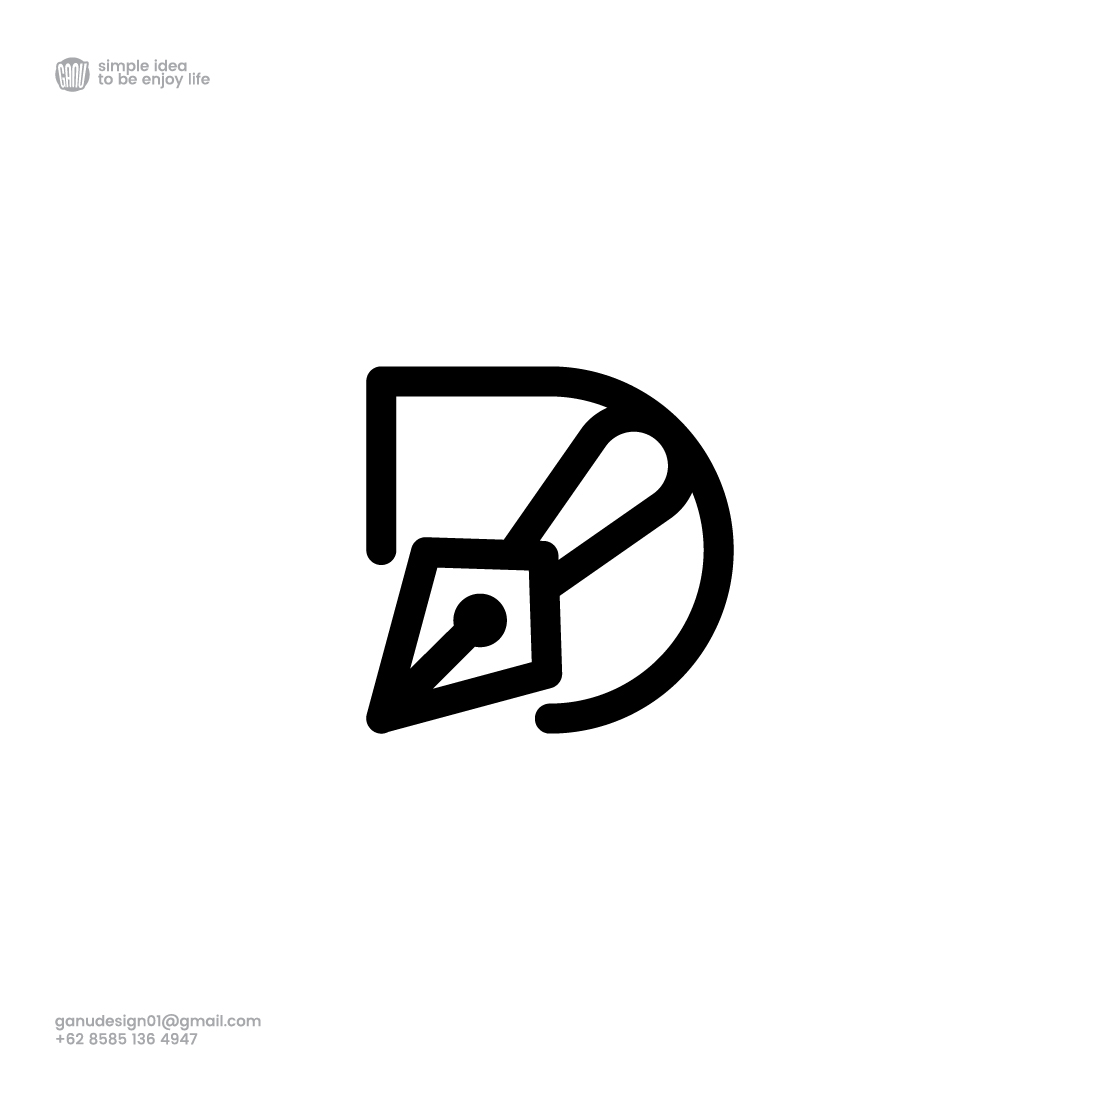 D pen letter logo design preview image.